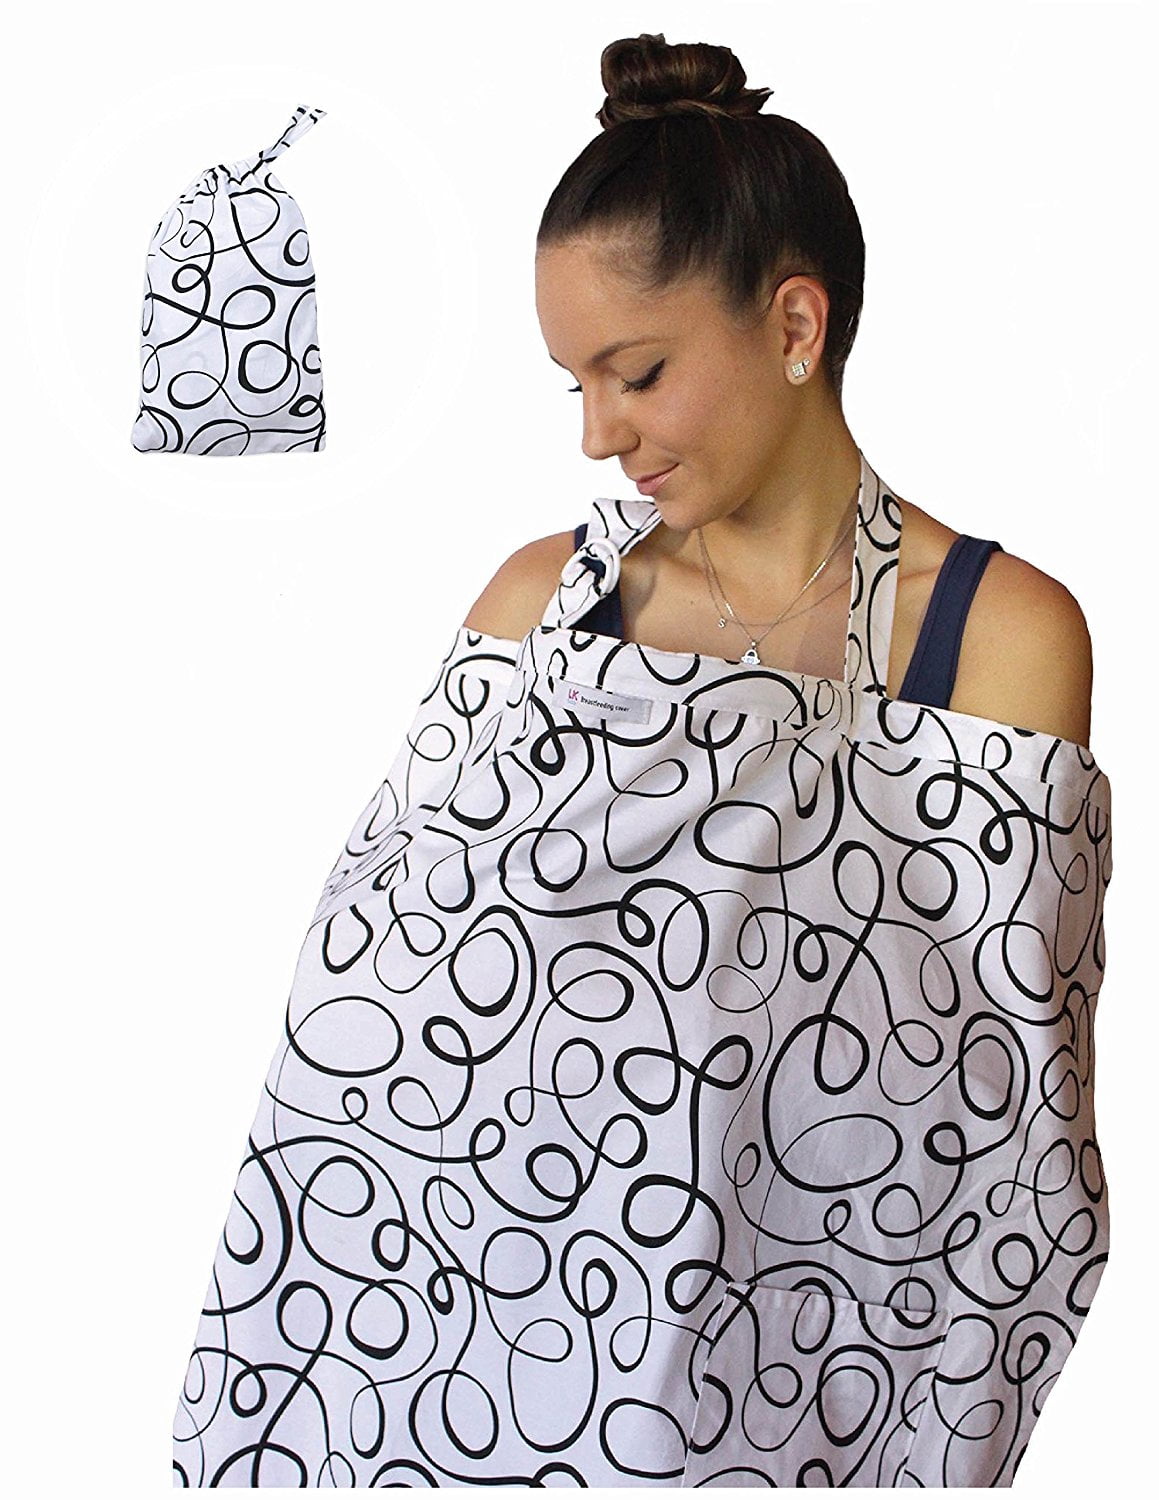 Baby Feeding Cover for Breastfeeding Cover ups Newborns in Public Full Coverage Allo Nursing Cover Breathable and Soft Cotton Light Gray Rigid Neckline and Burp Cloth 